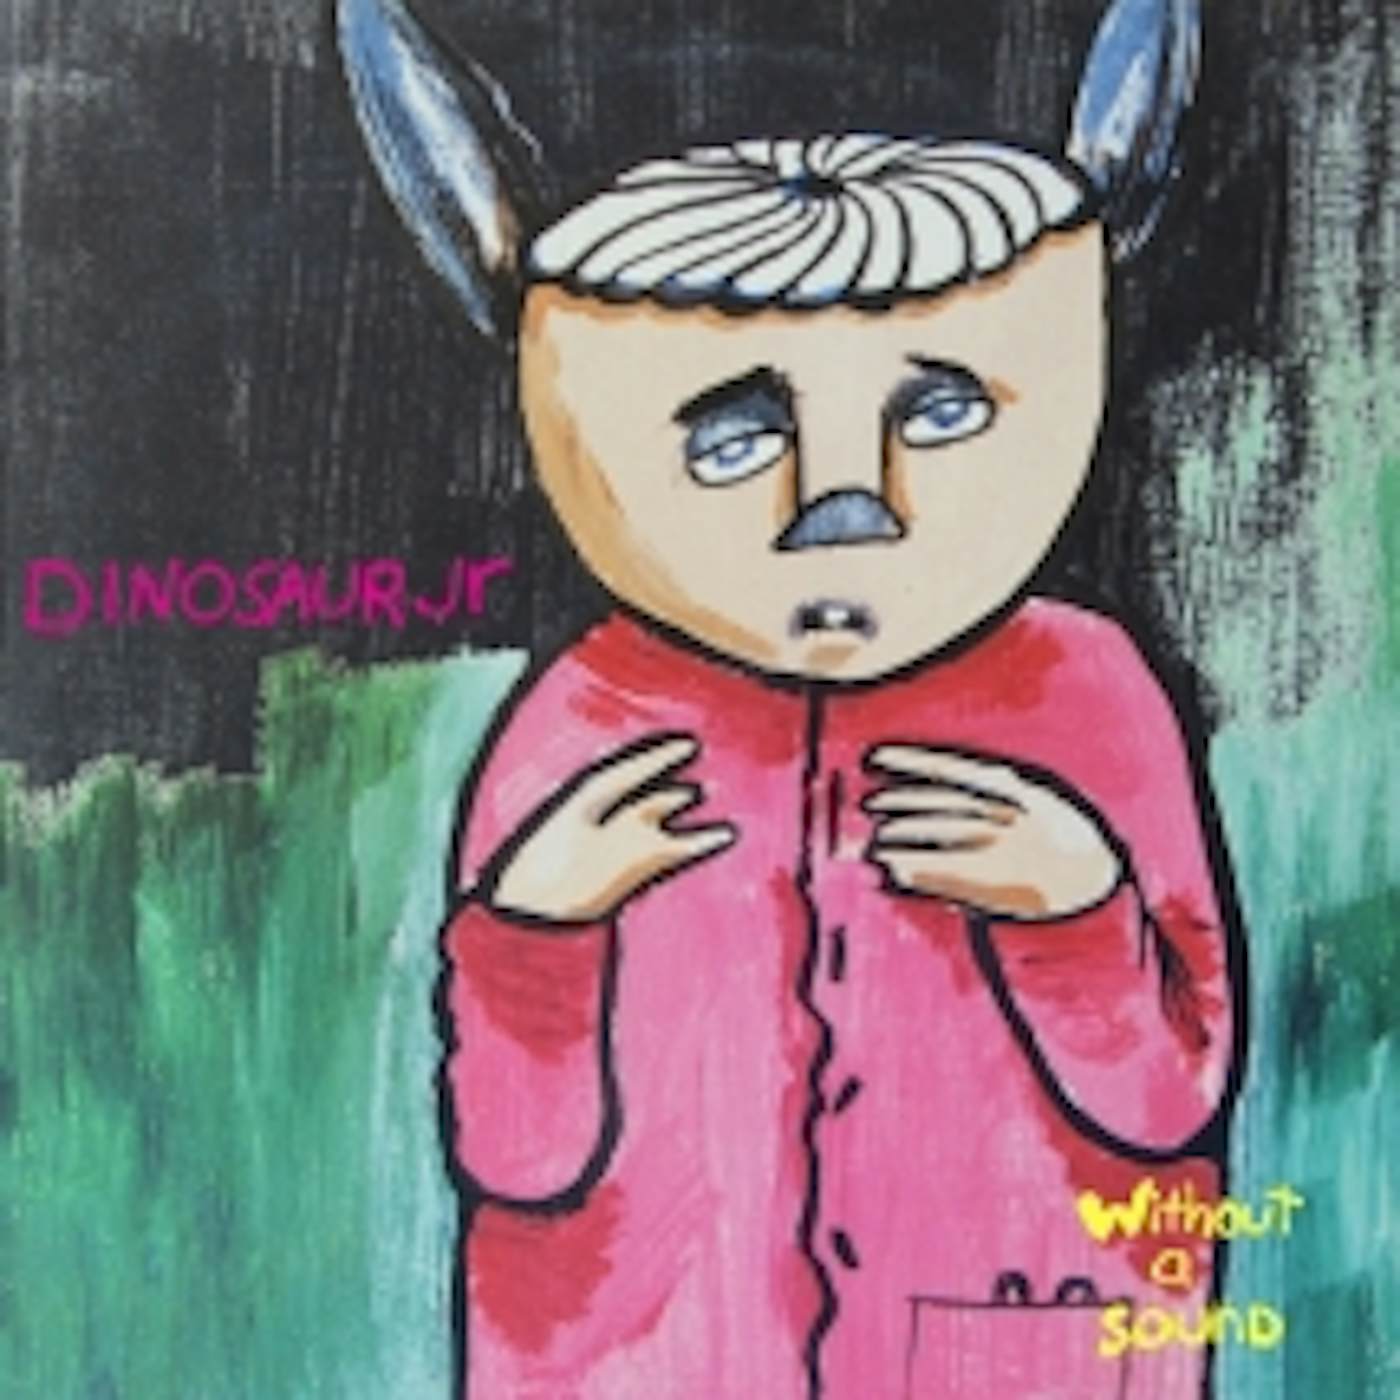 Dinosaur Jr. Without a Sound Vinyl Record